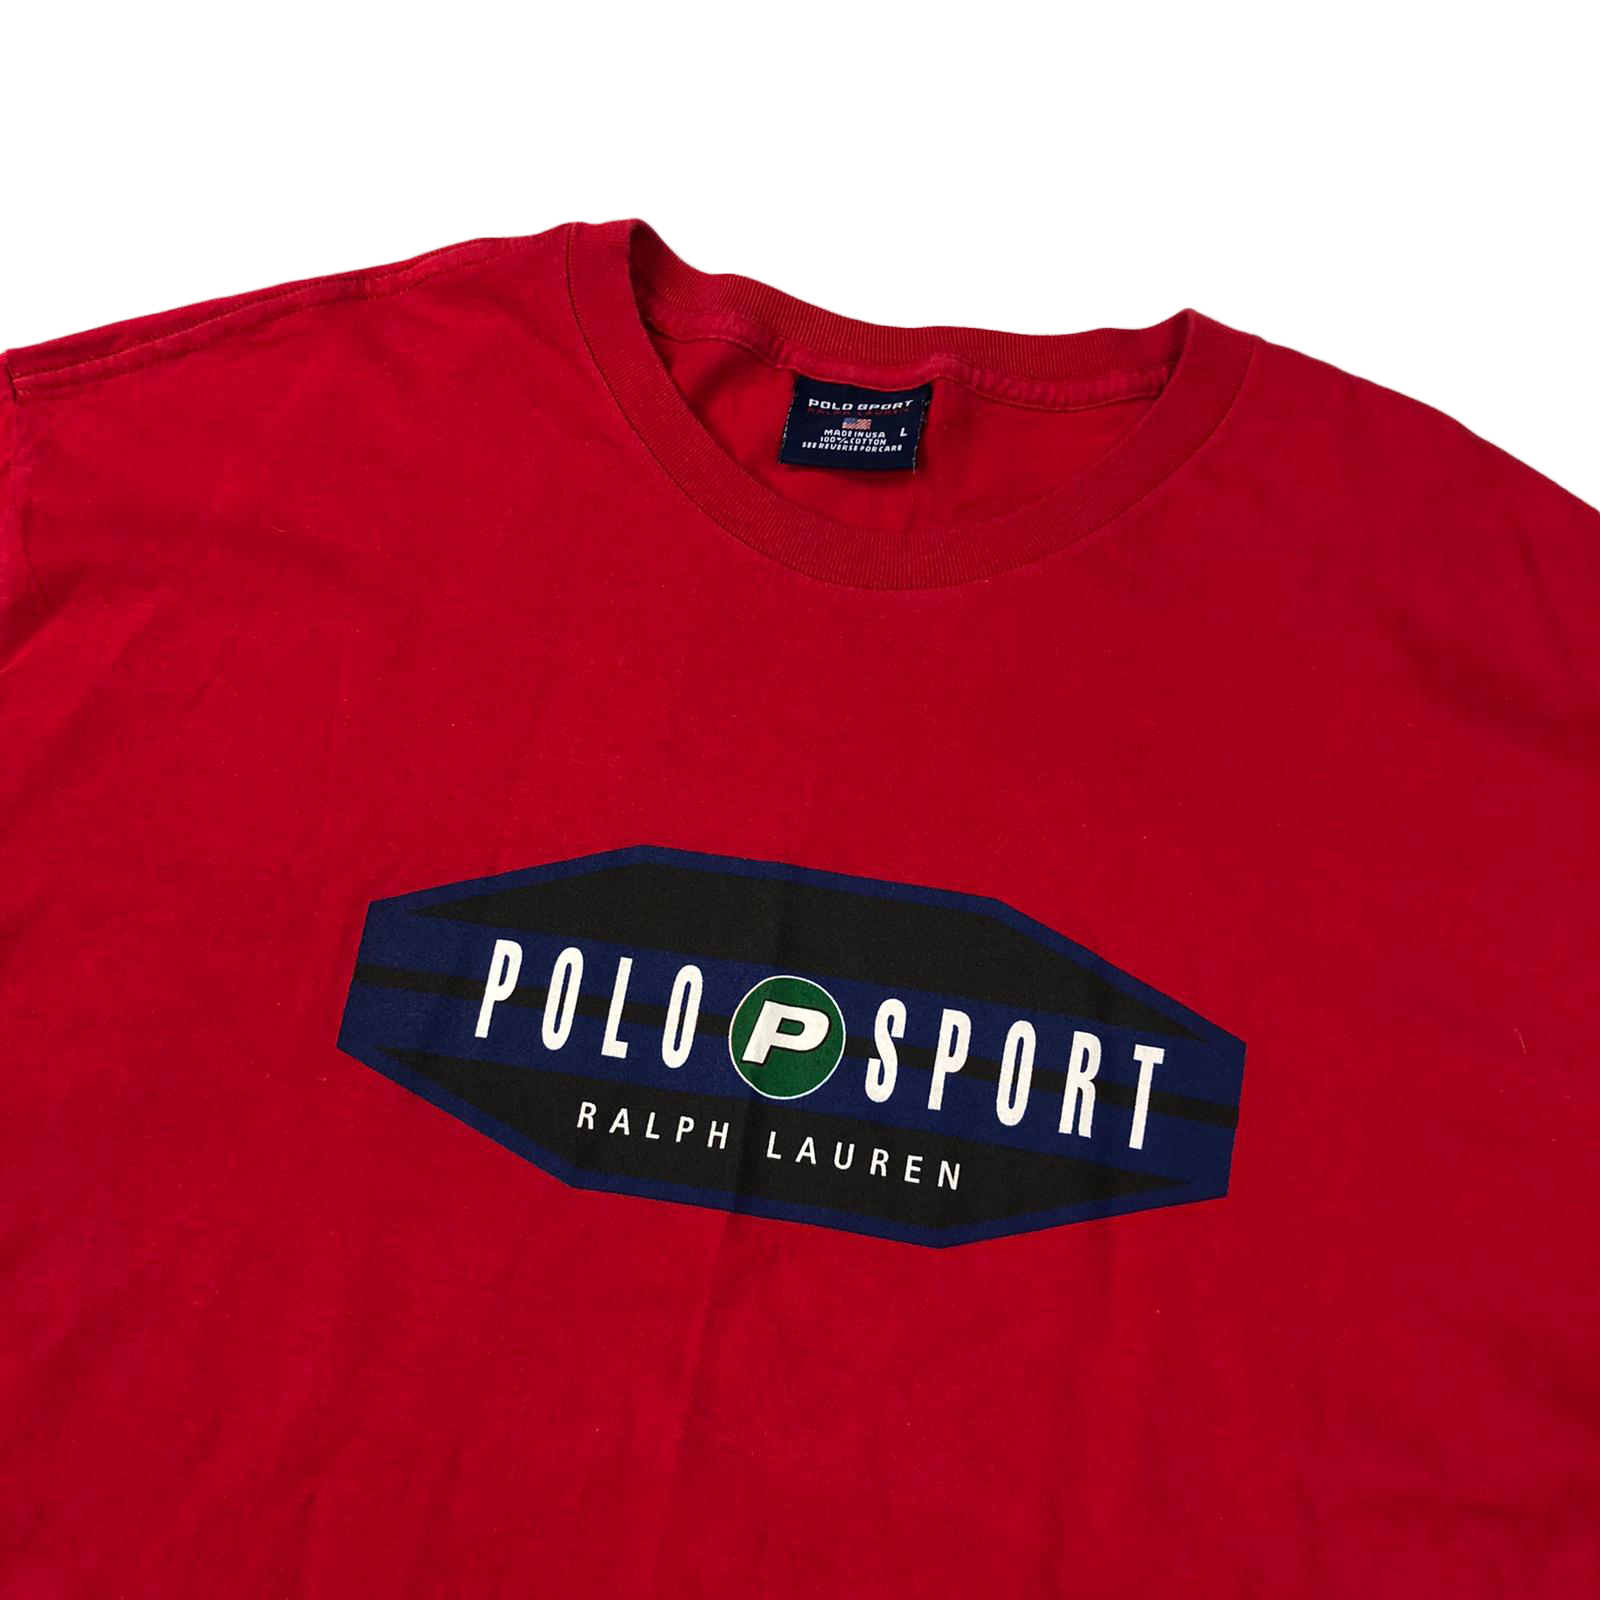 Polo Sport t-shirt